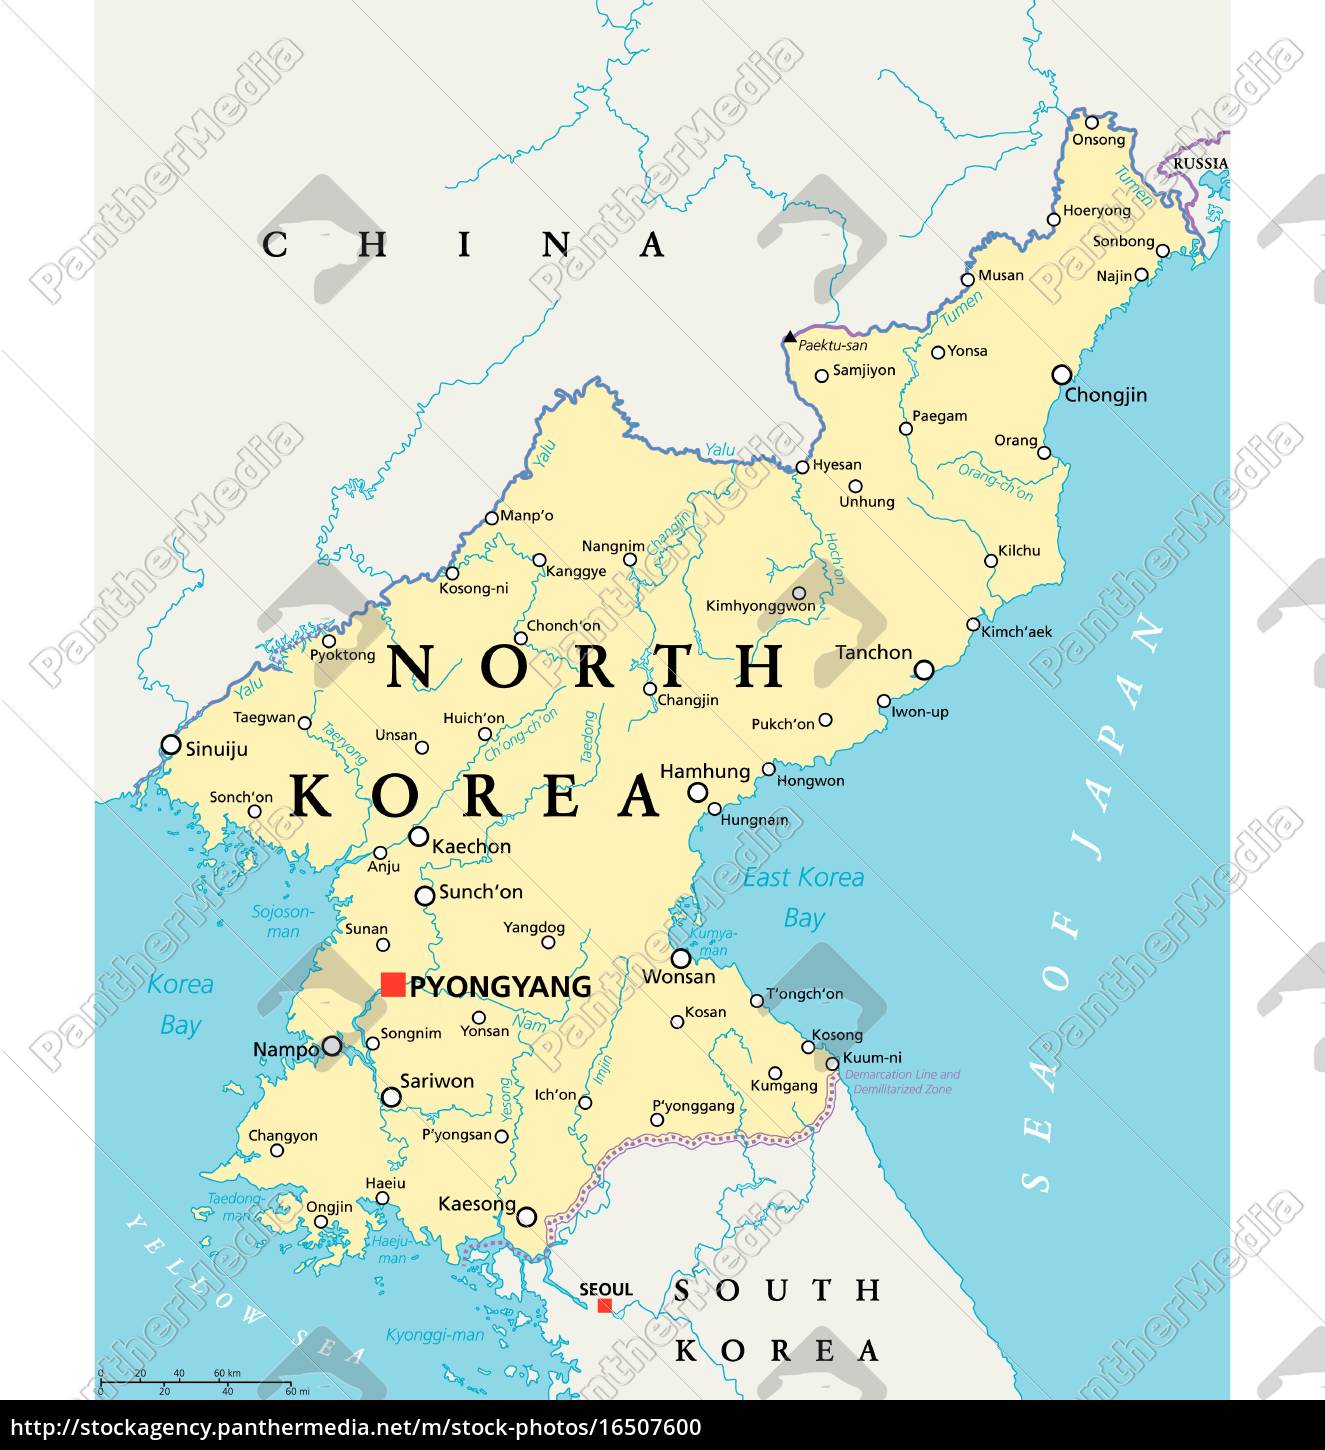 capital of north korea map North Korea Political Map Royalty Free Photo 16507600 capital of north korea map